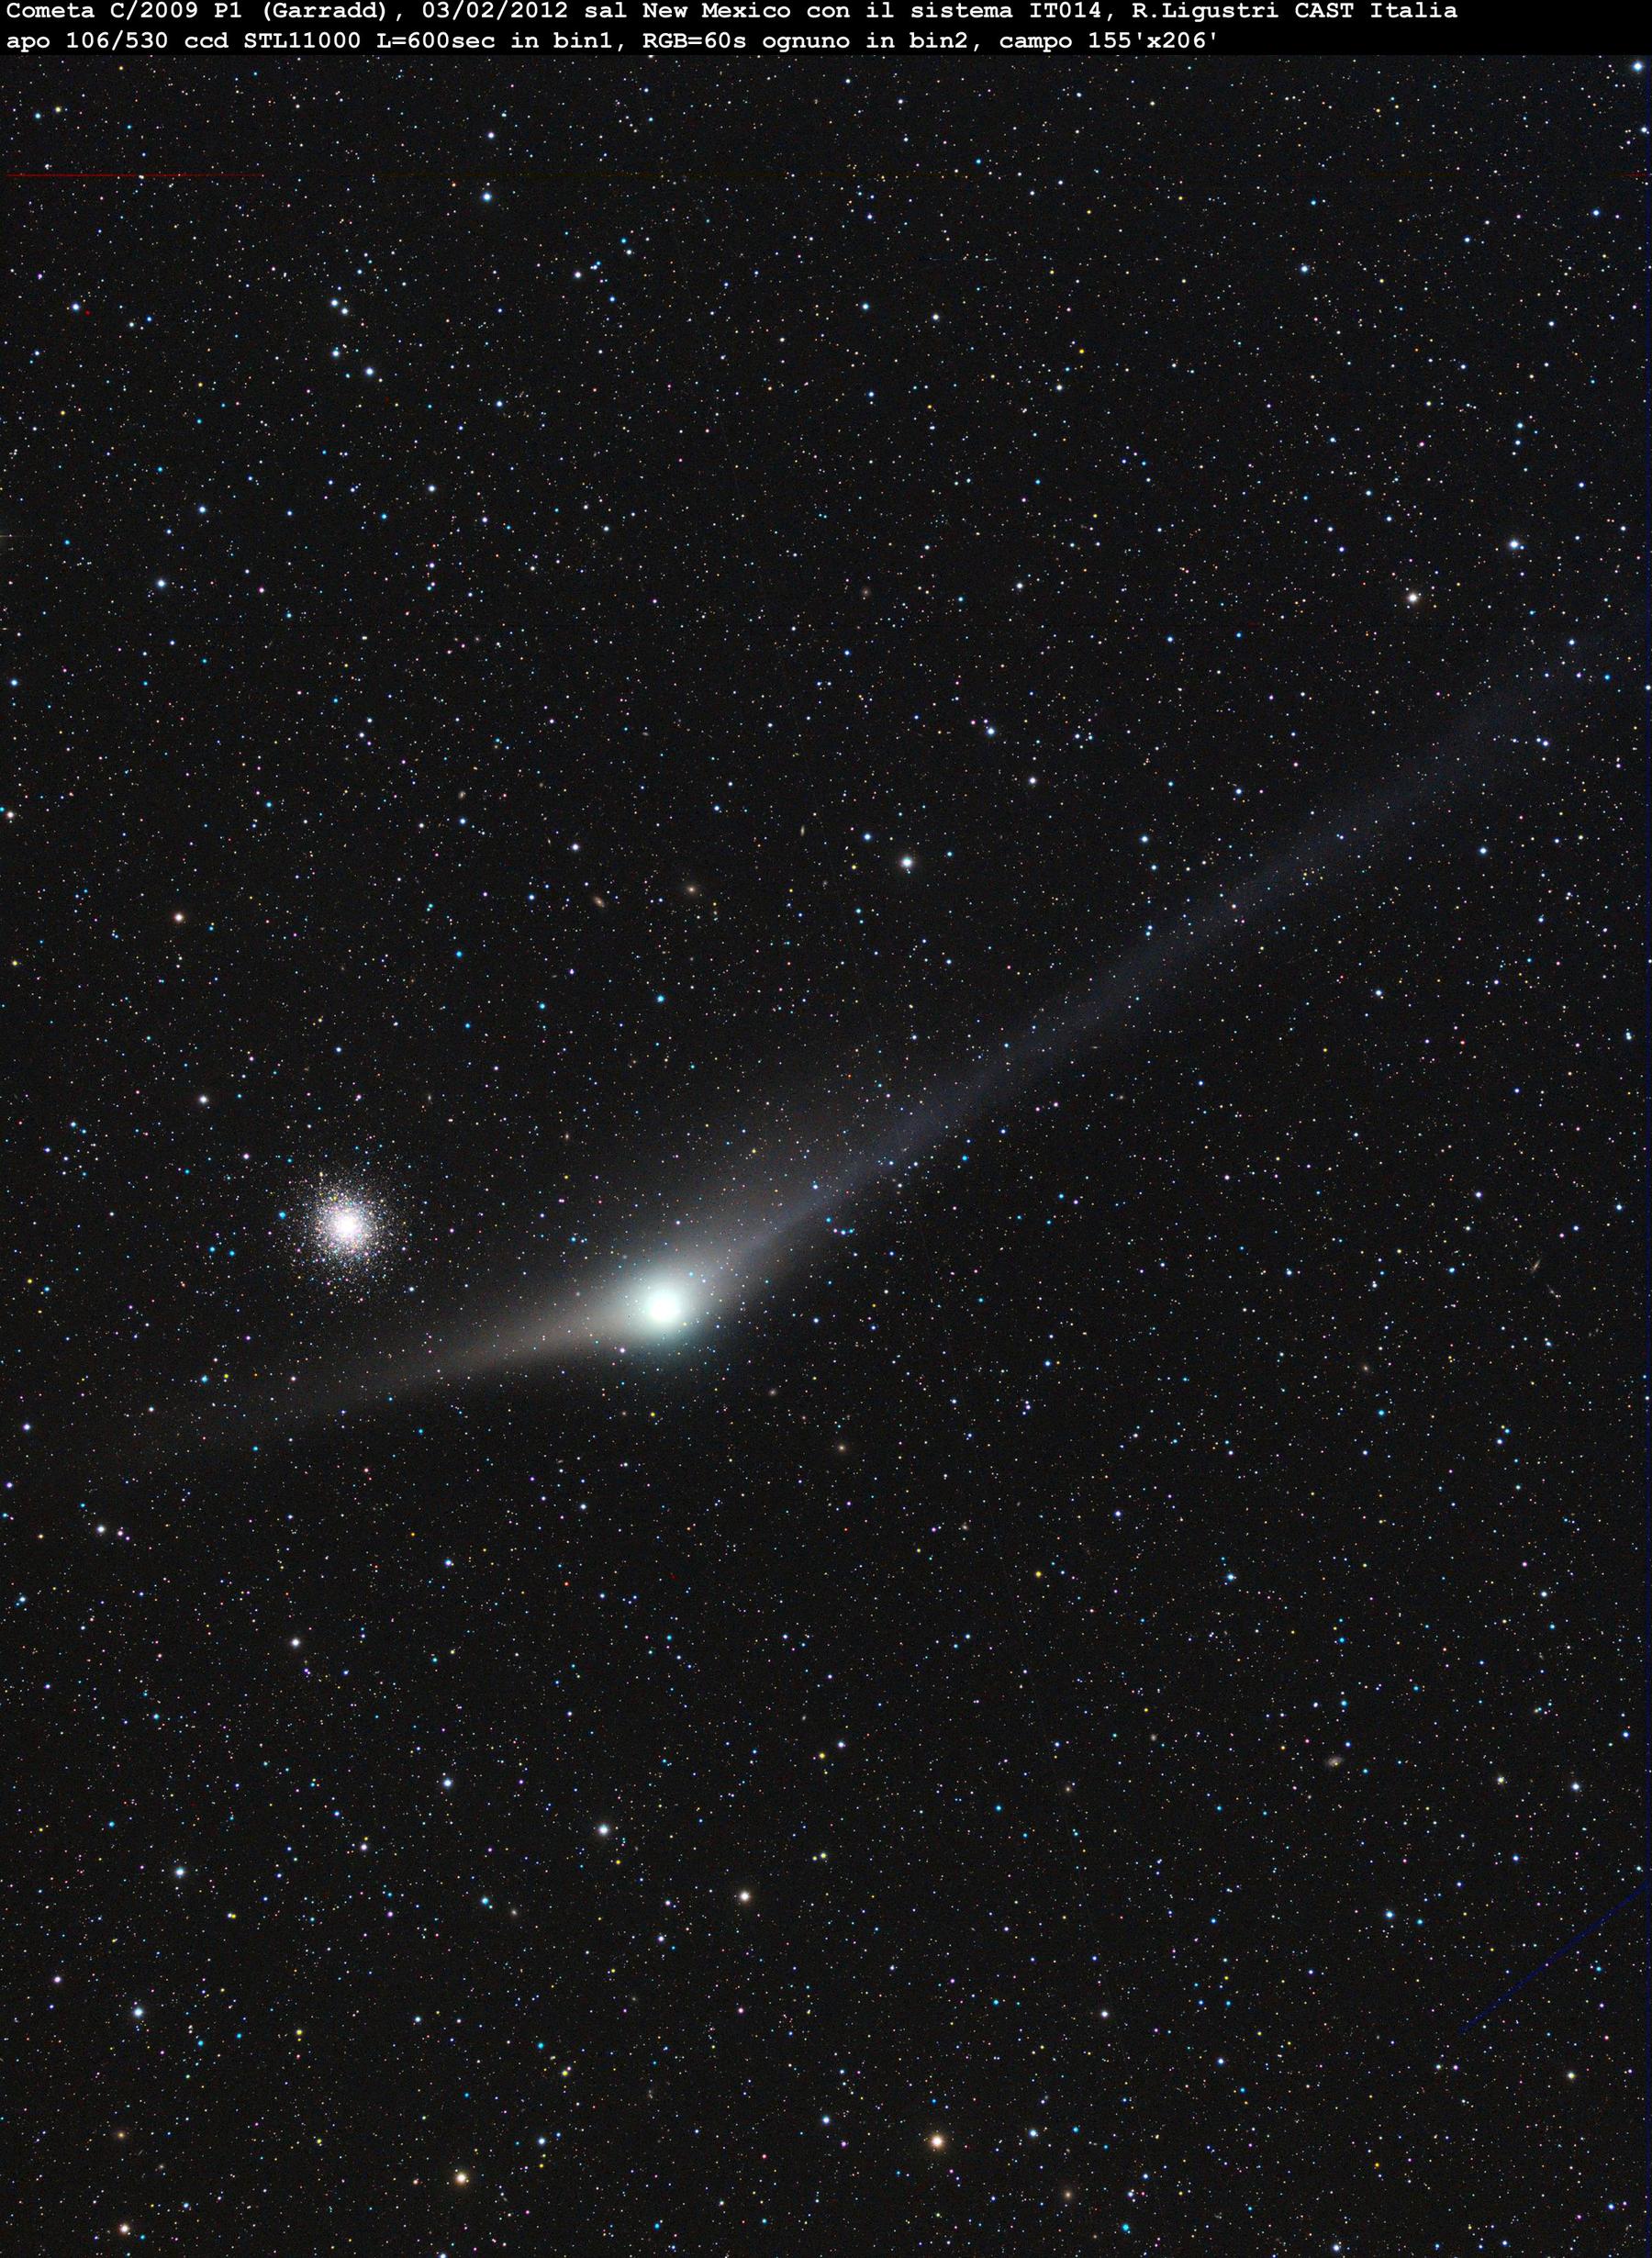 Kometa Garradda i M92